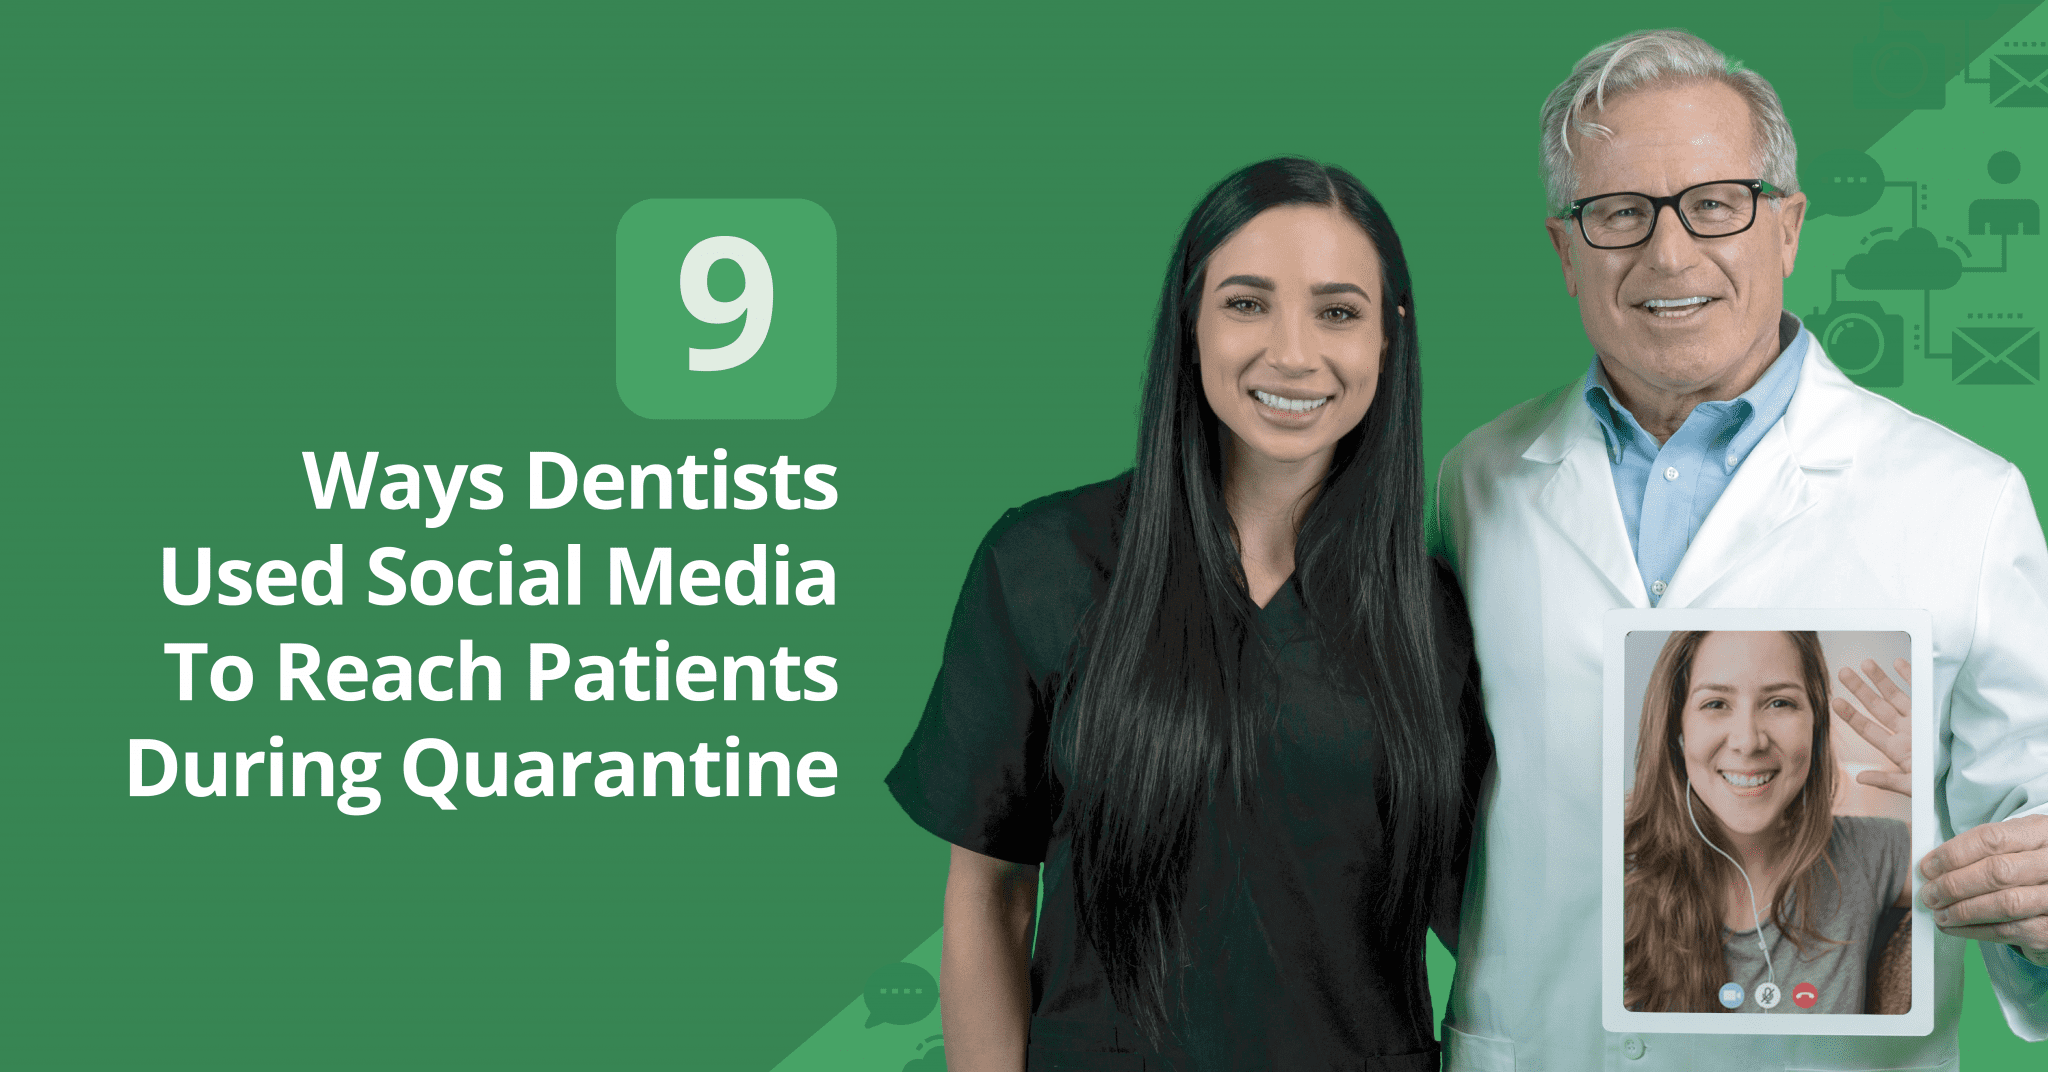 My Social Practice - Social Media Marketing for Dental & Dental Specialty Practices - Facebook boosting for dentists